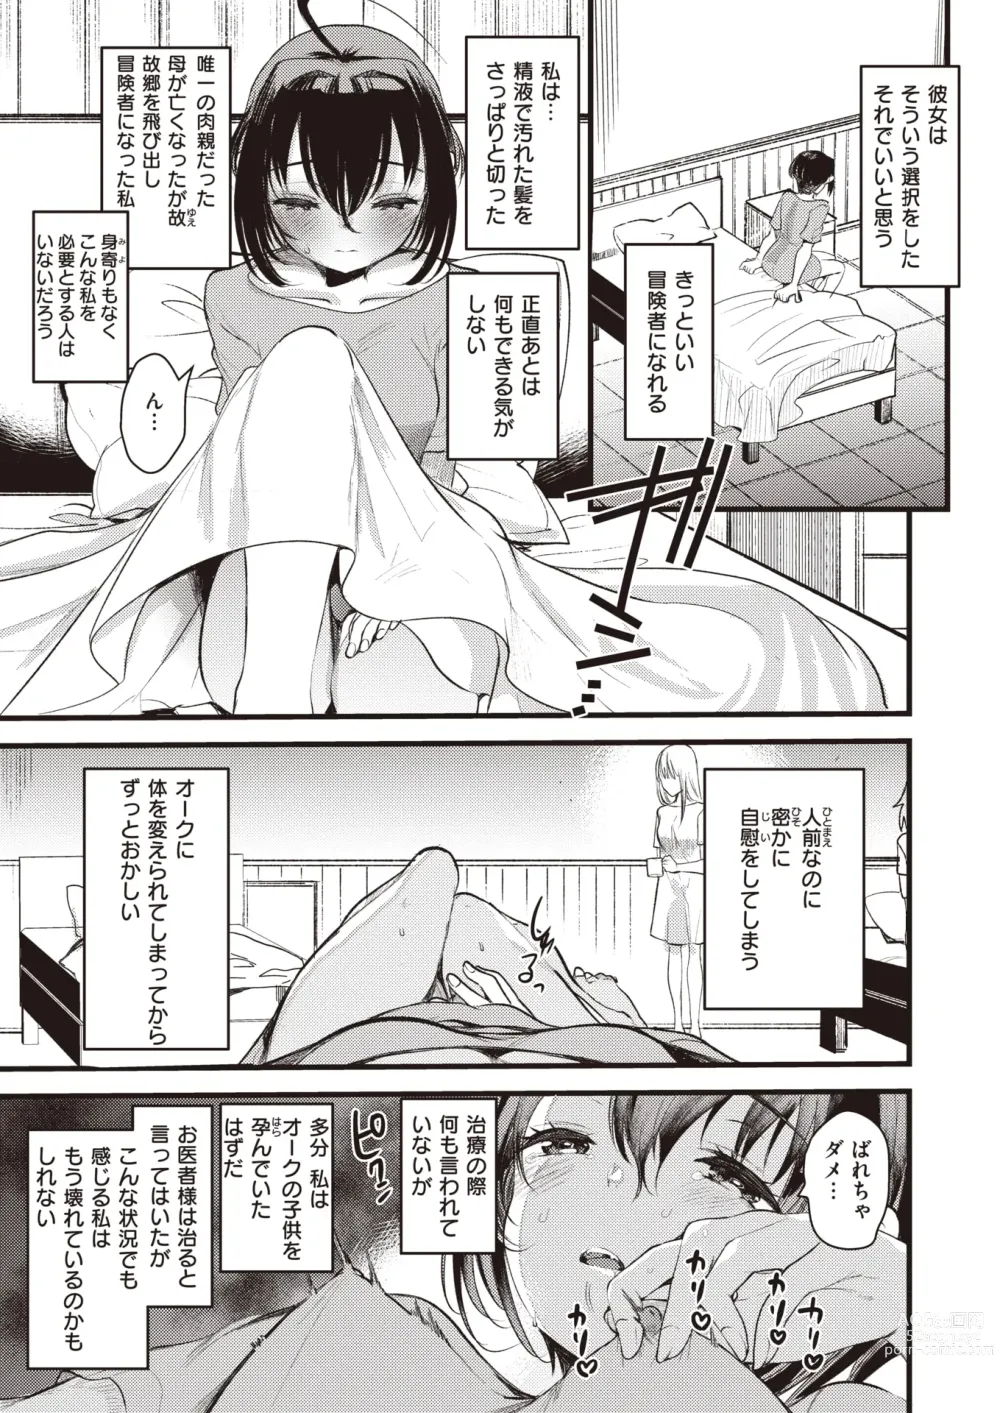 Page 52 of manga Isekai Rakuten Vol. 28